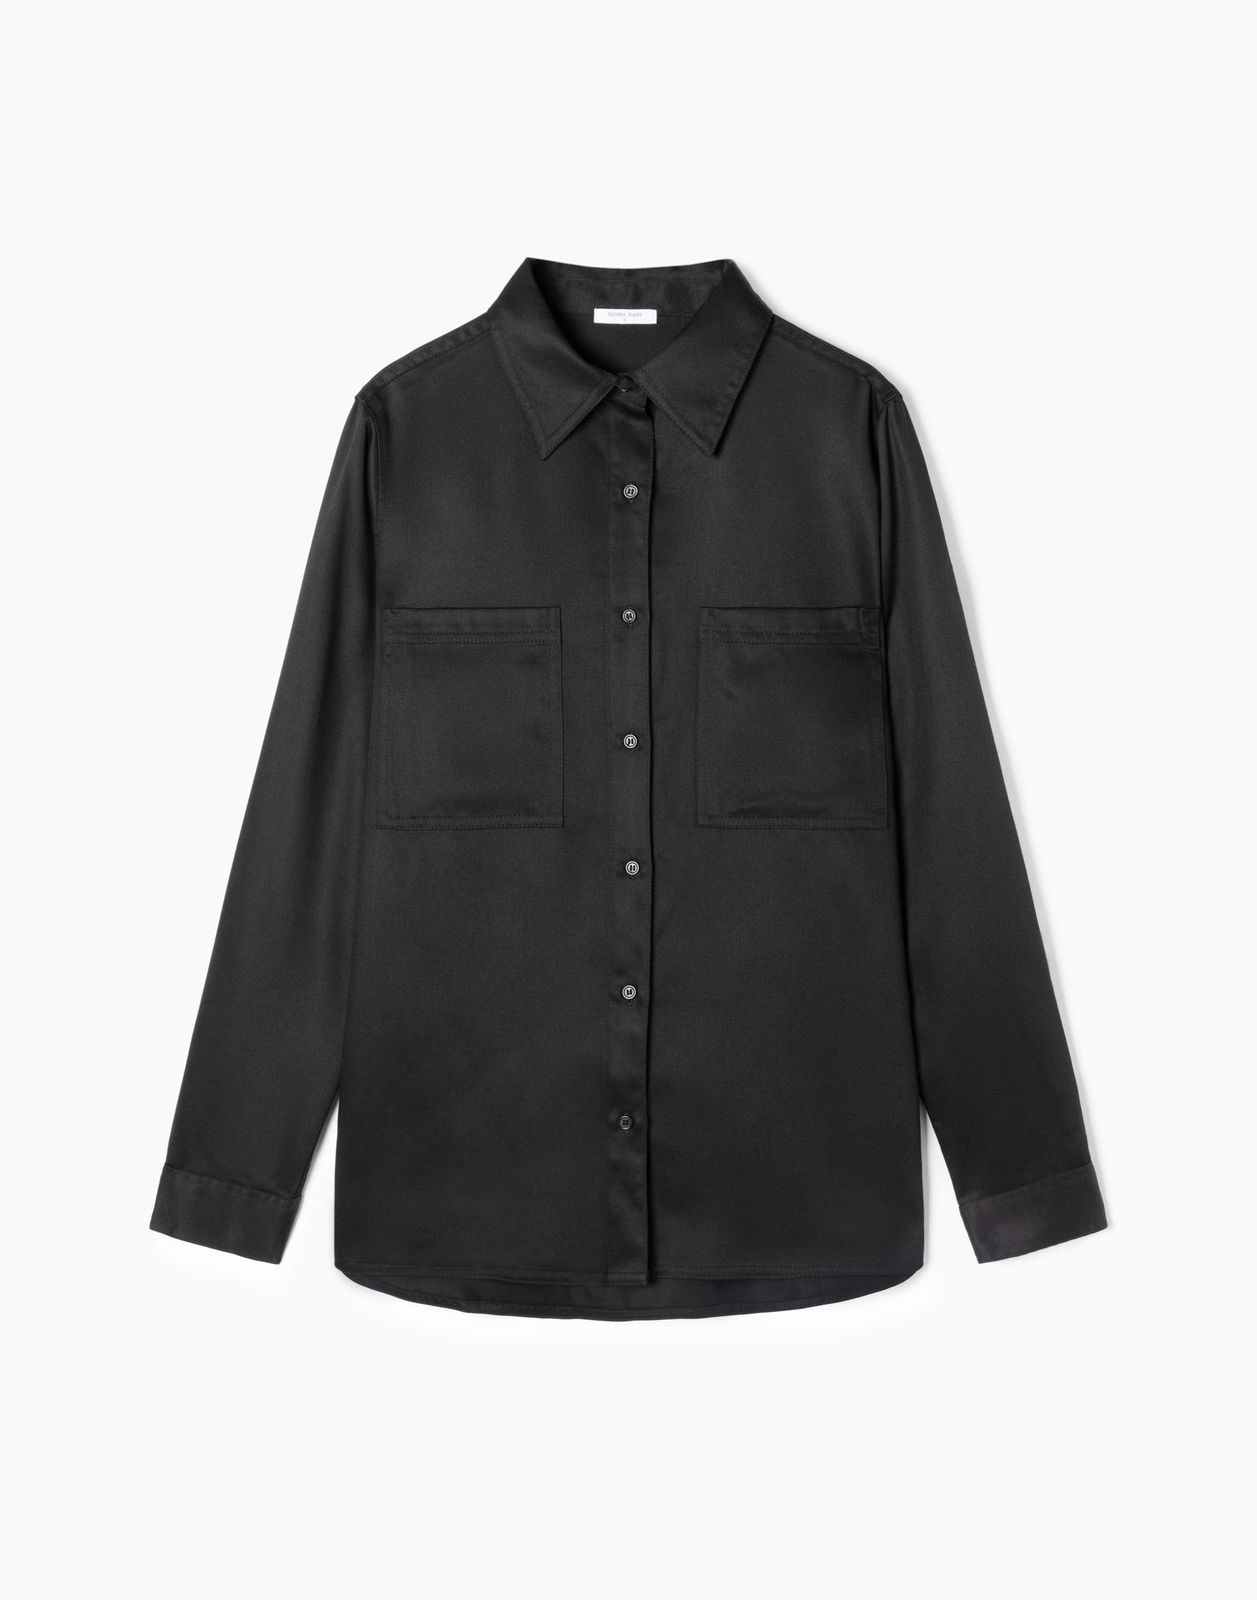 Рубашка женская Gloria Jeans GWT003269 черная XS (38-40)